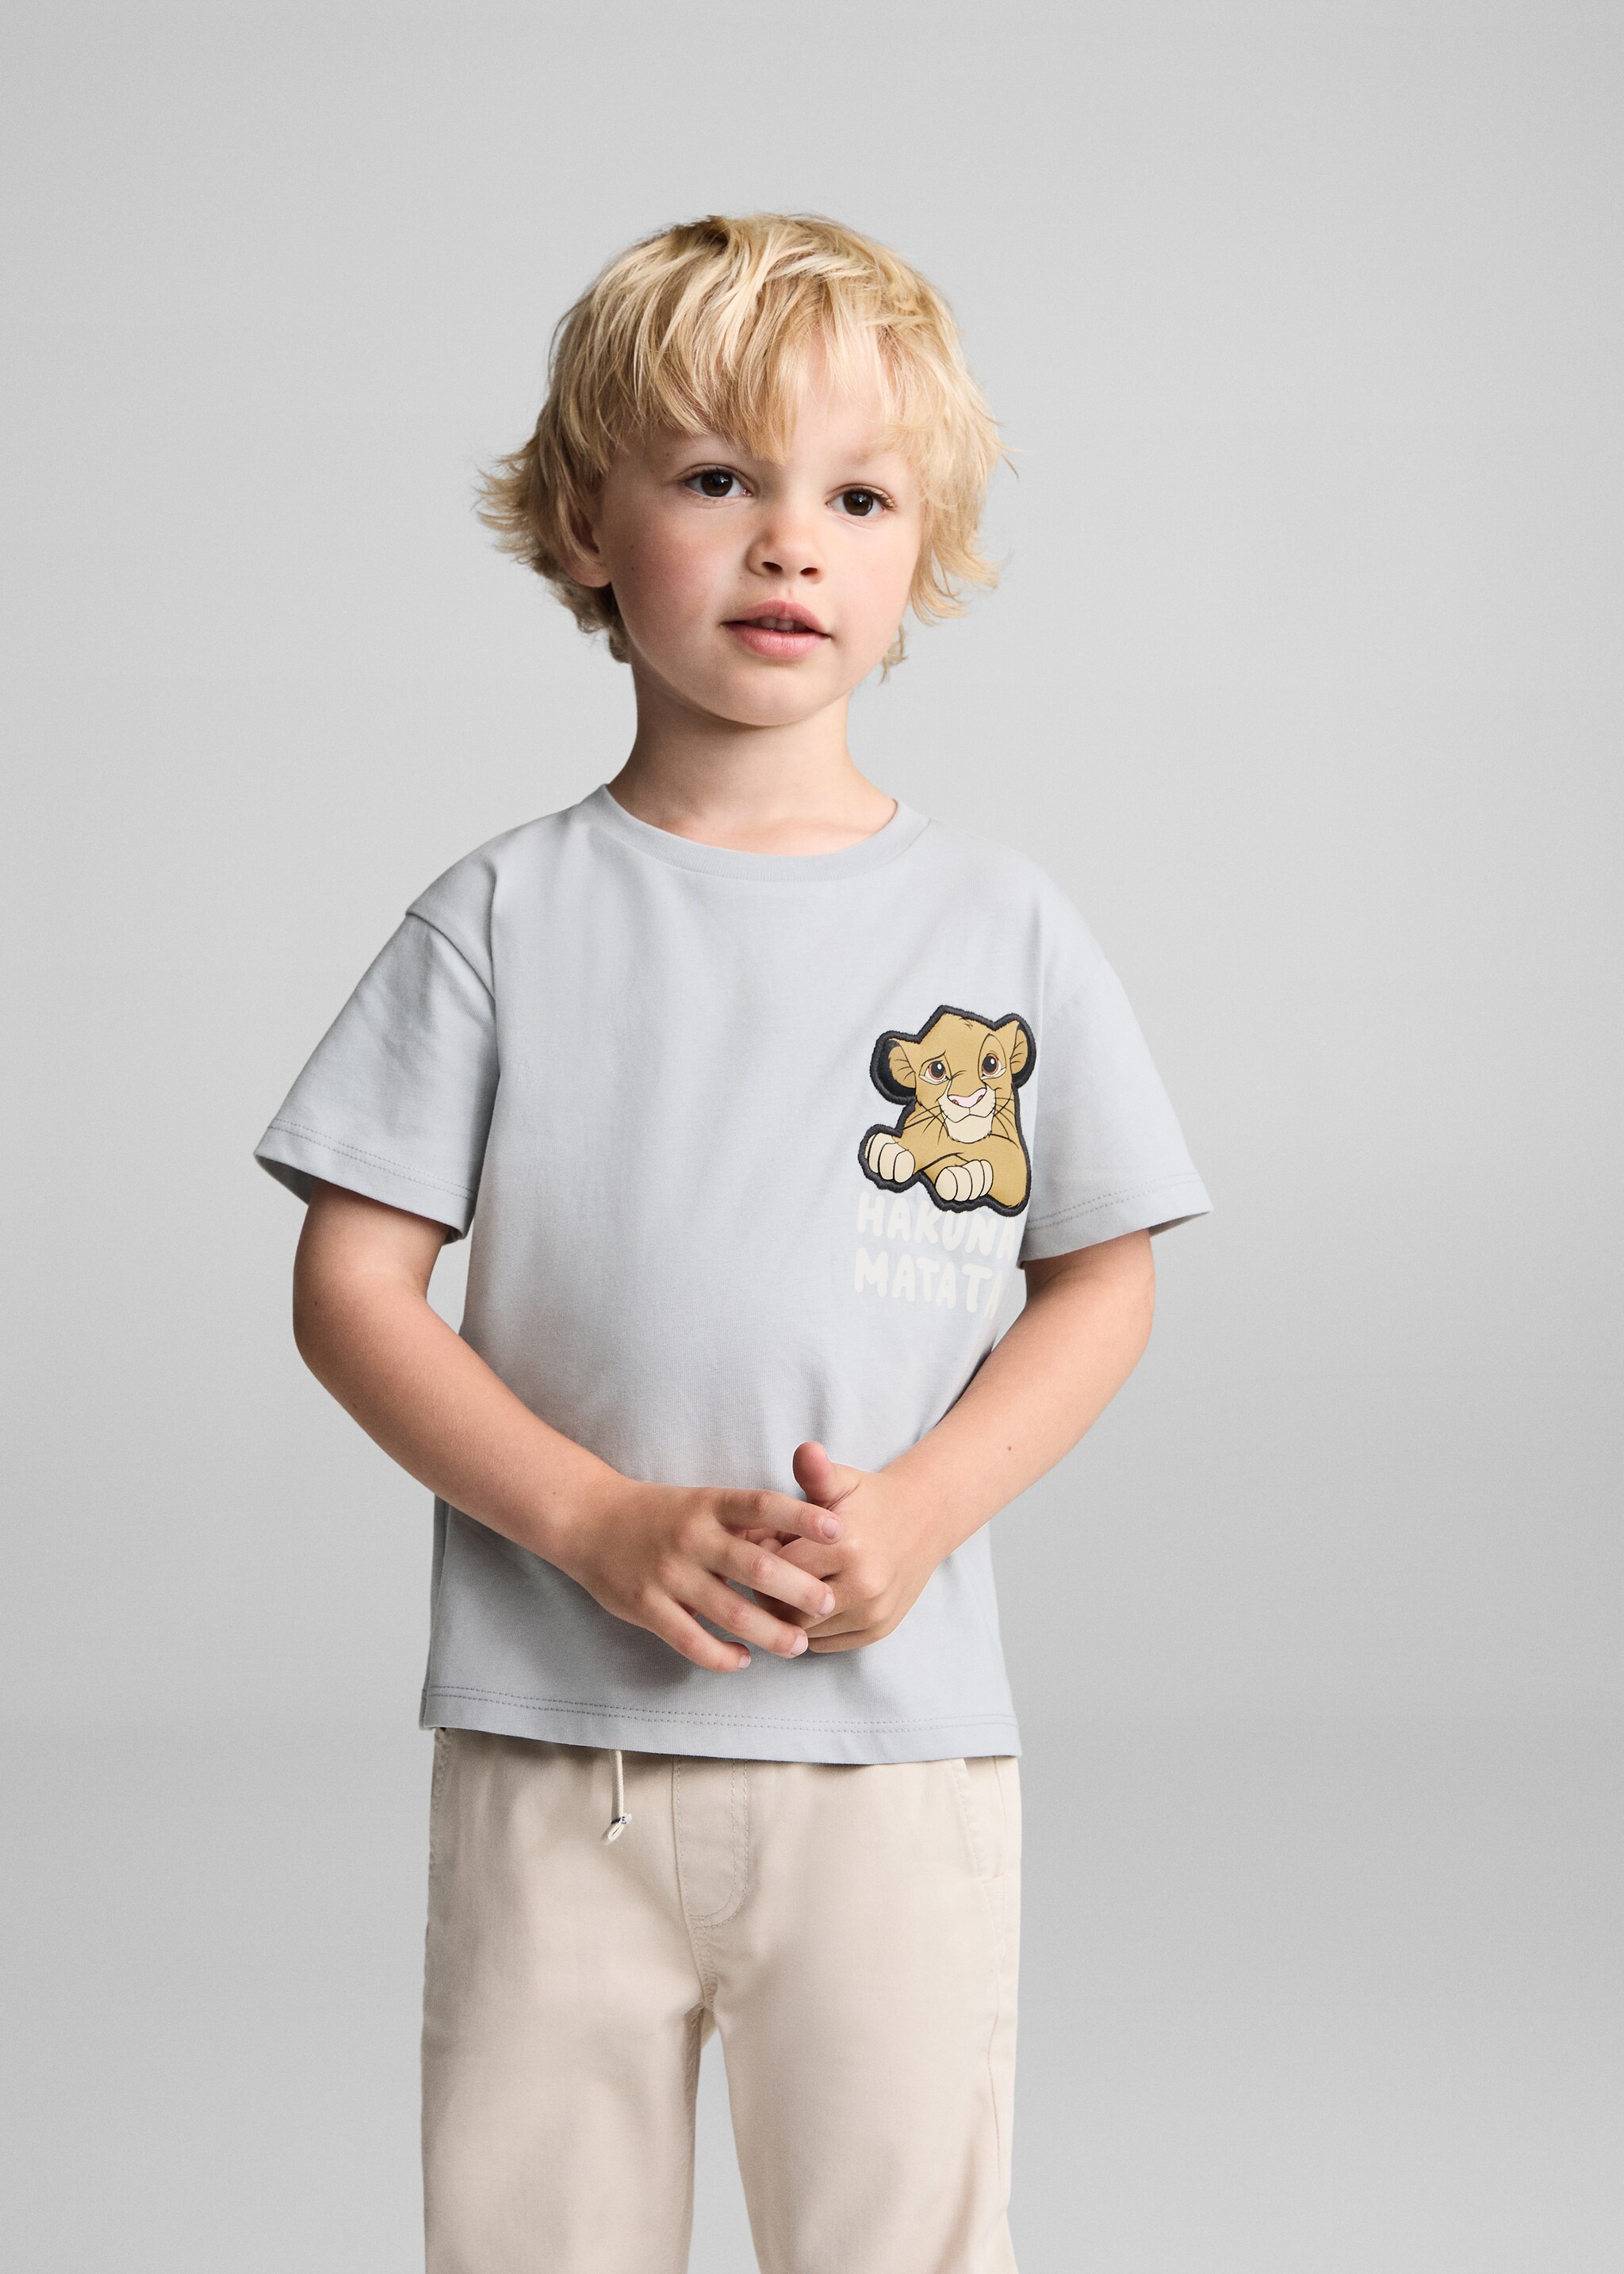 The Lion King t-shirt - Medium plane